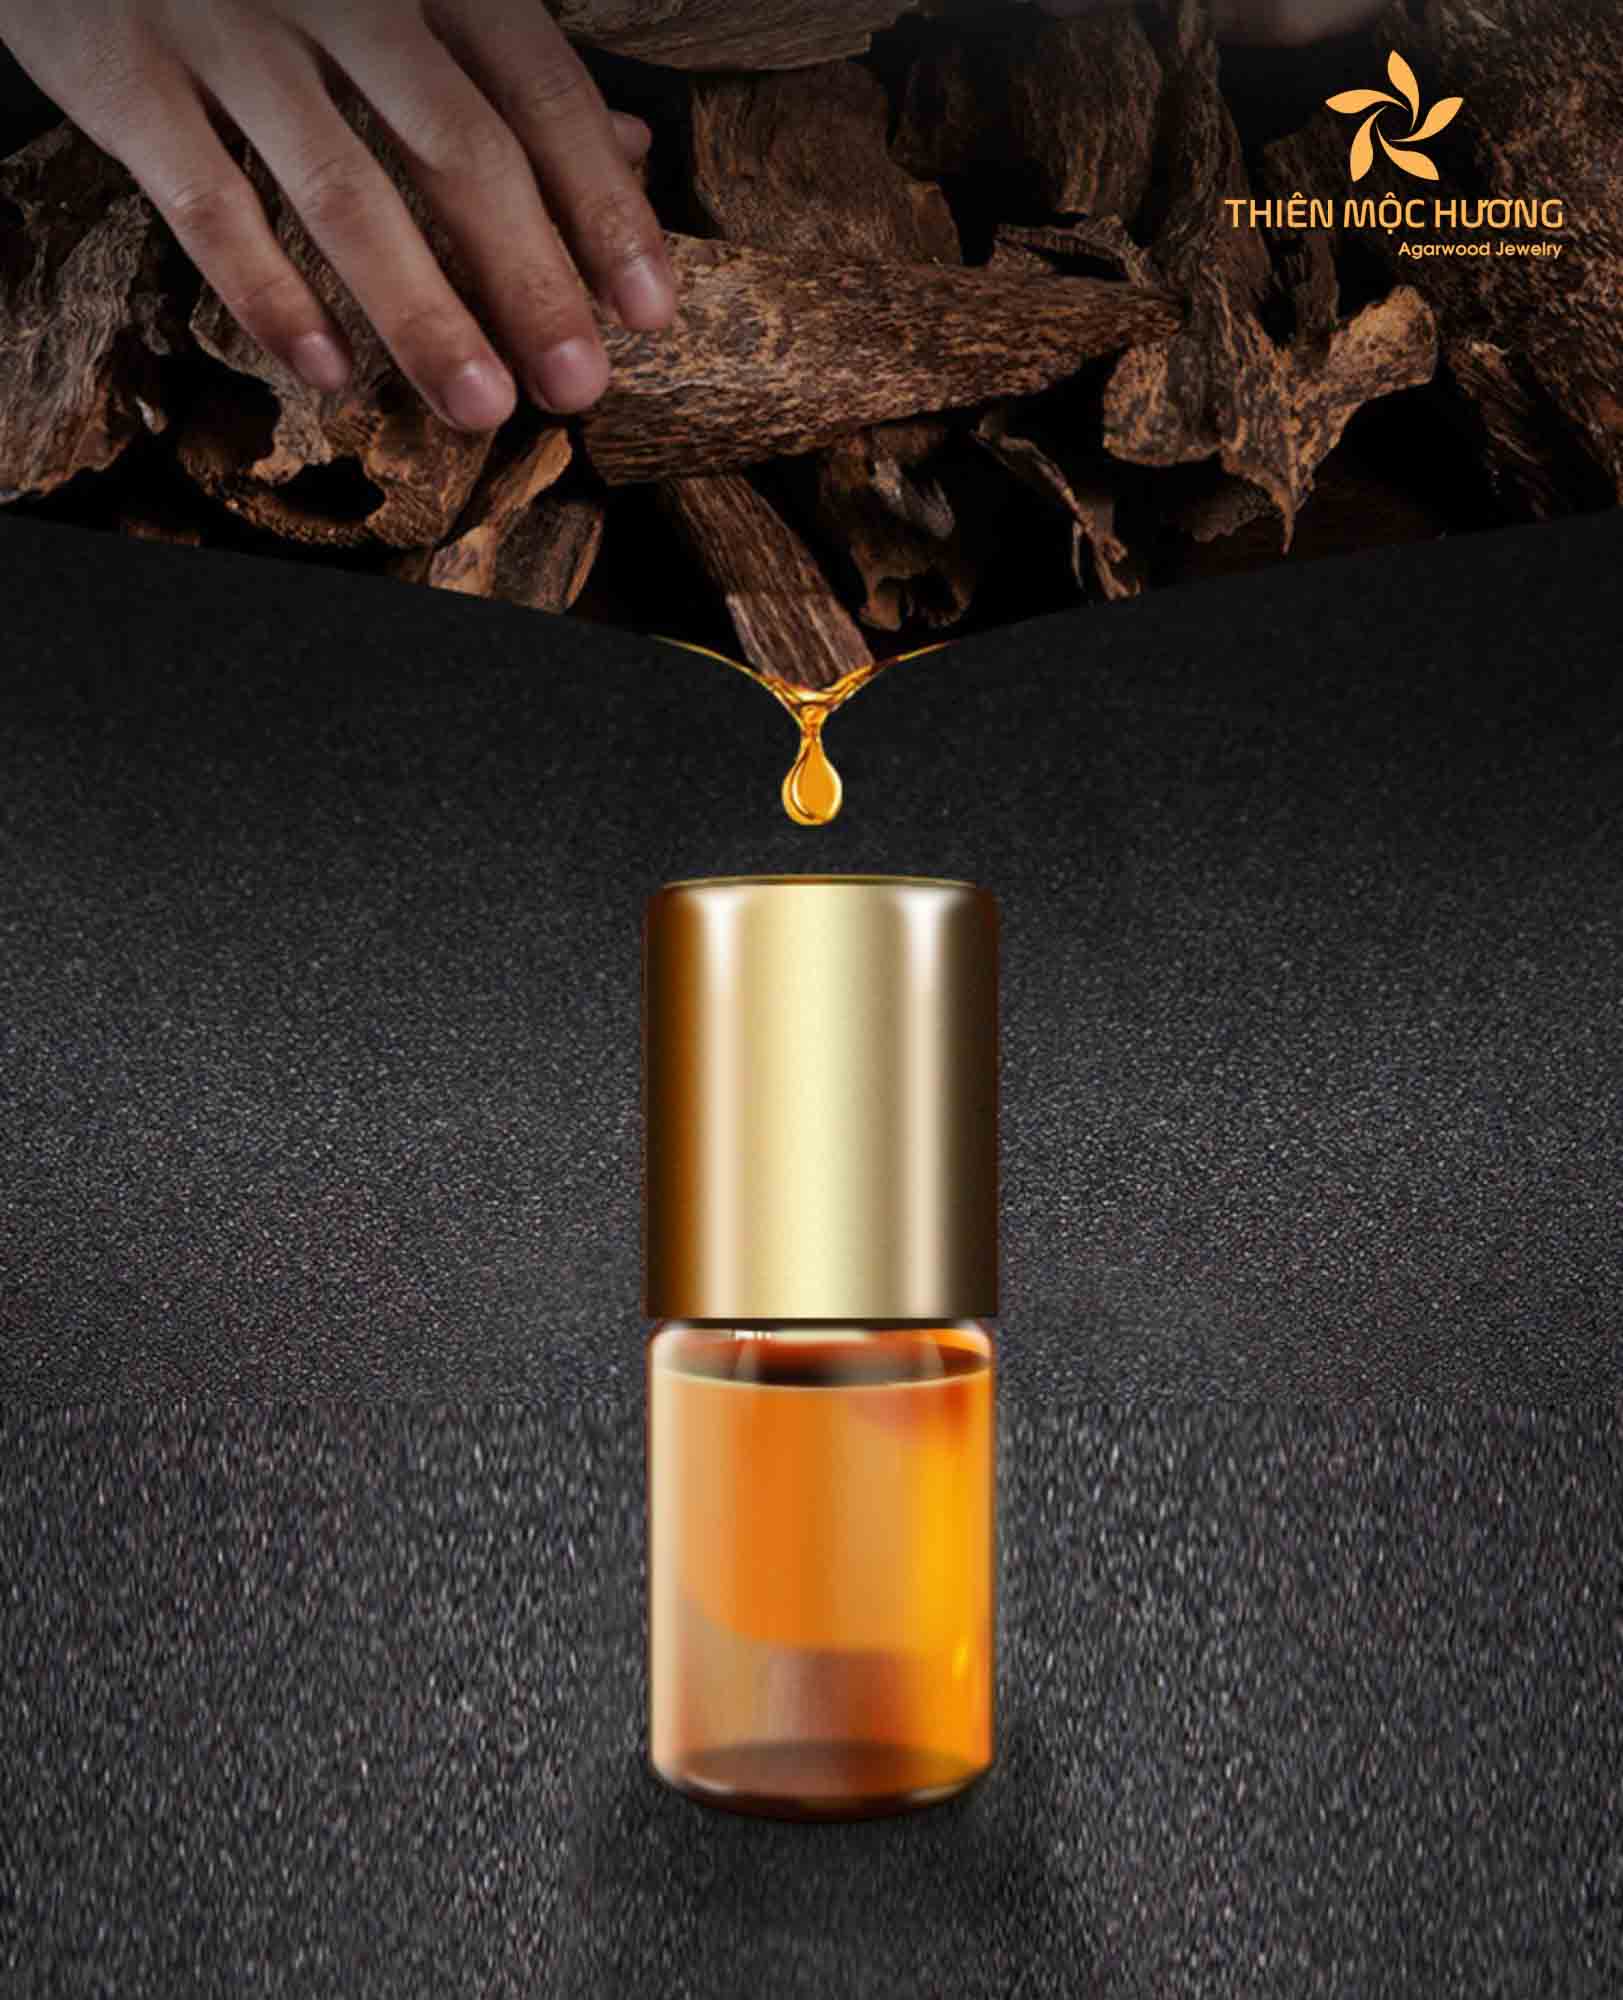 Agarwood essential oil - A Precious Source